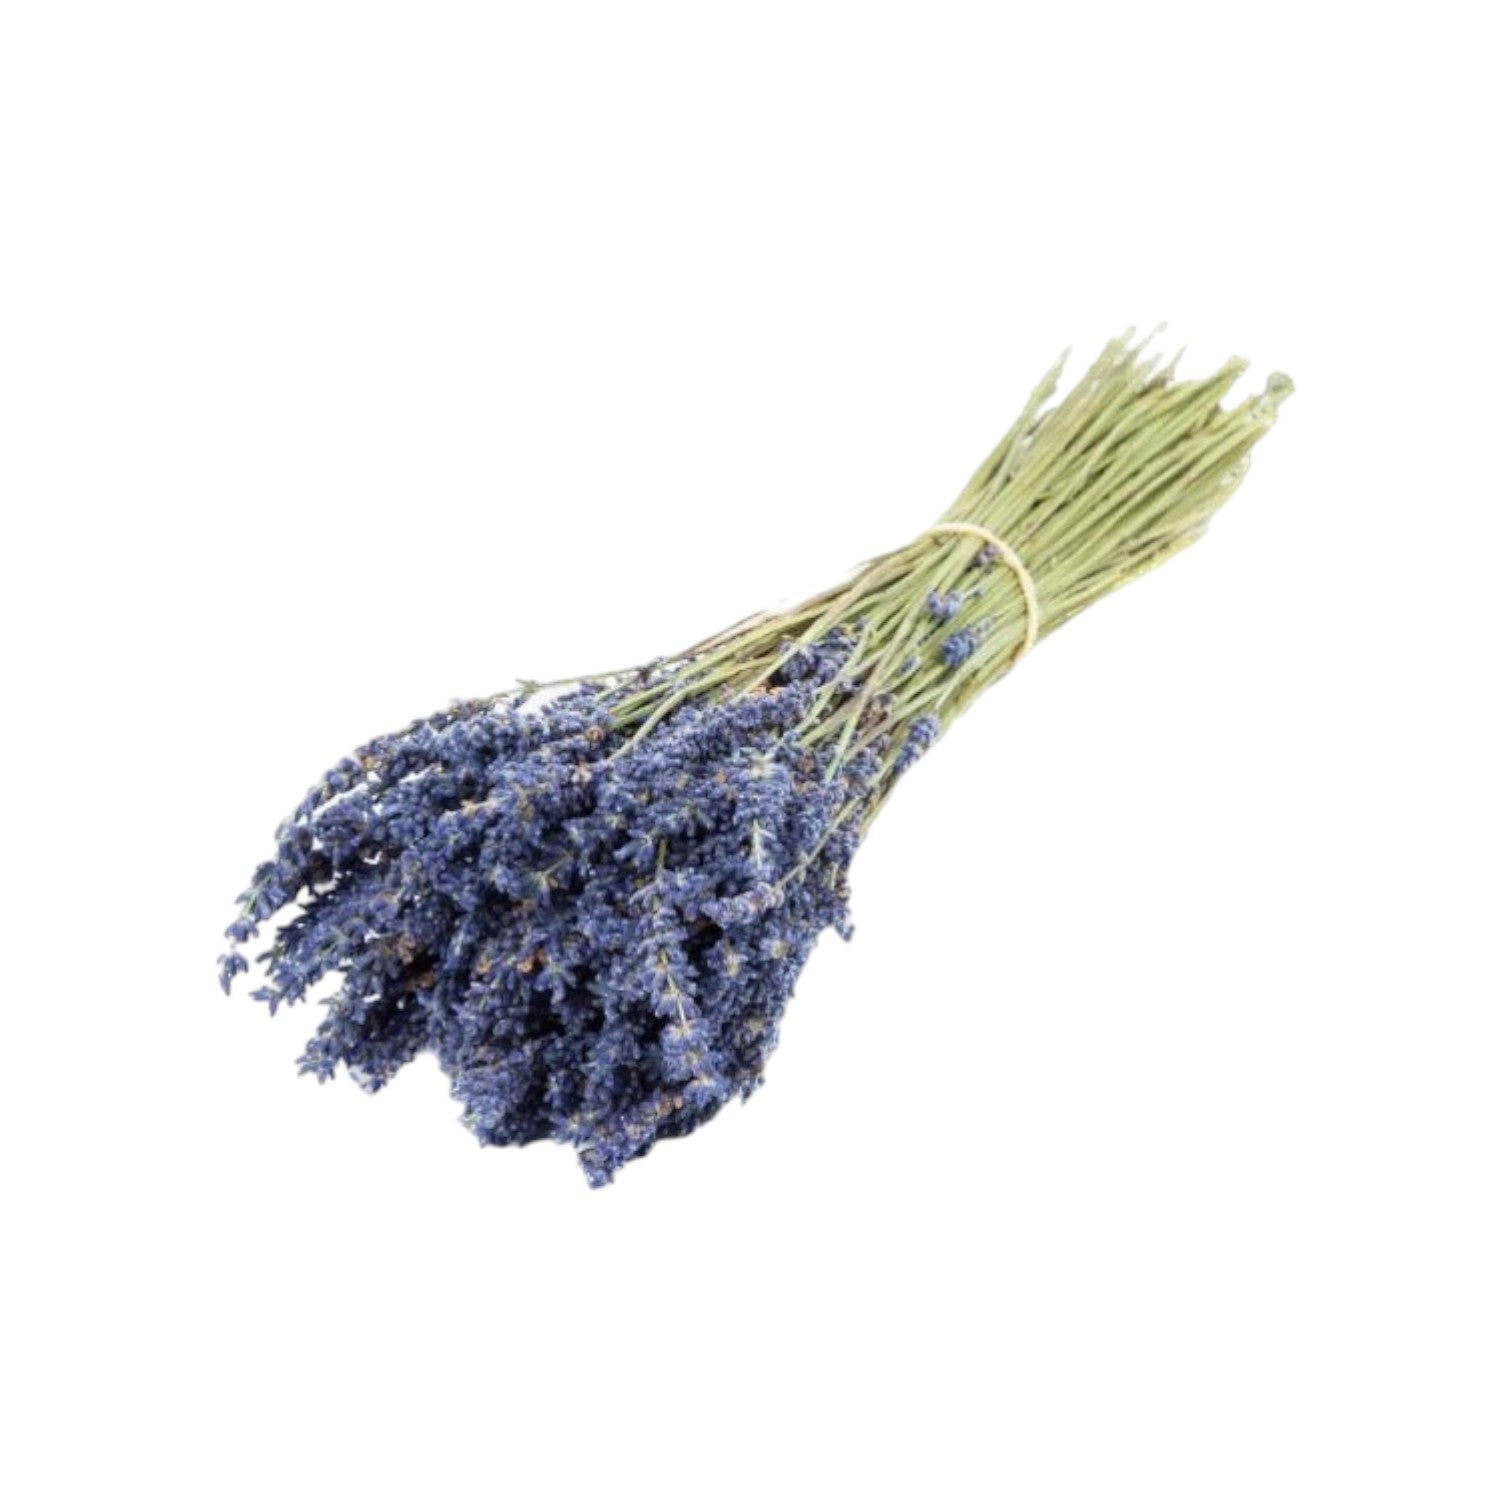 Maison d'Abri - Bosje met lavendel 'Lavender' (Gedroogd)